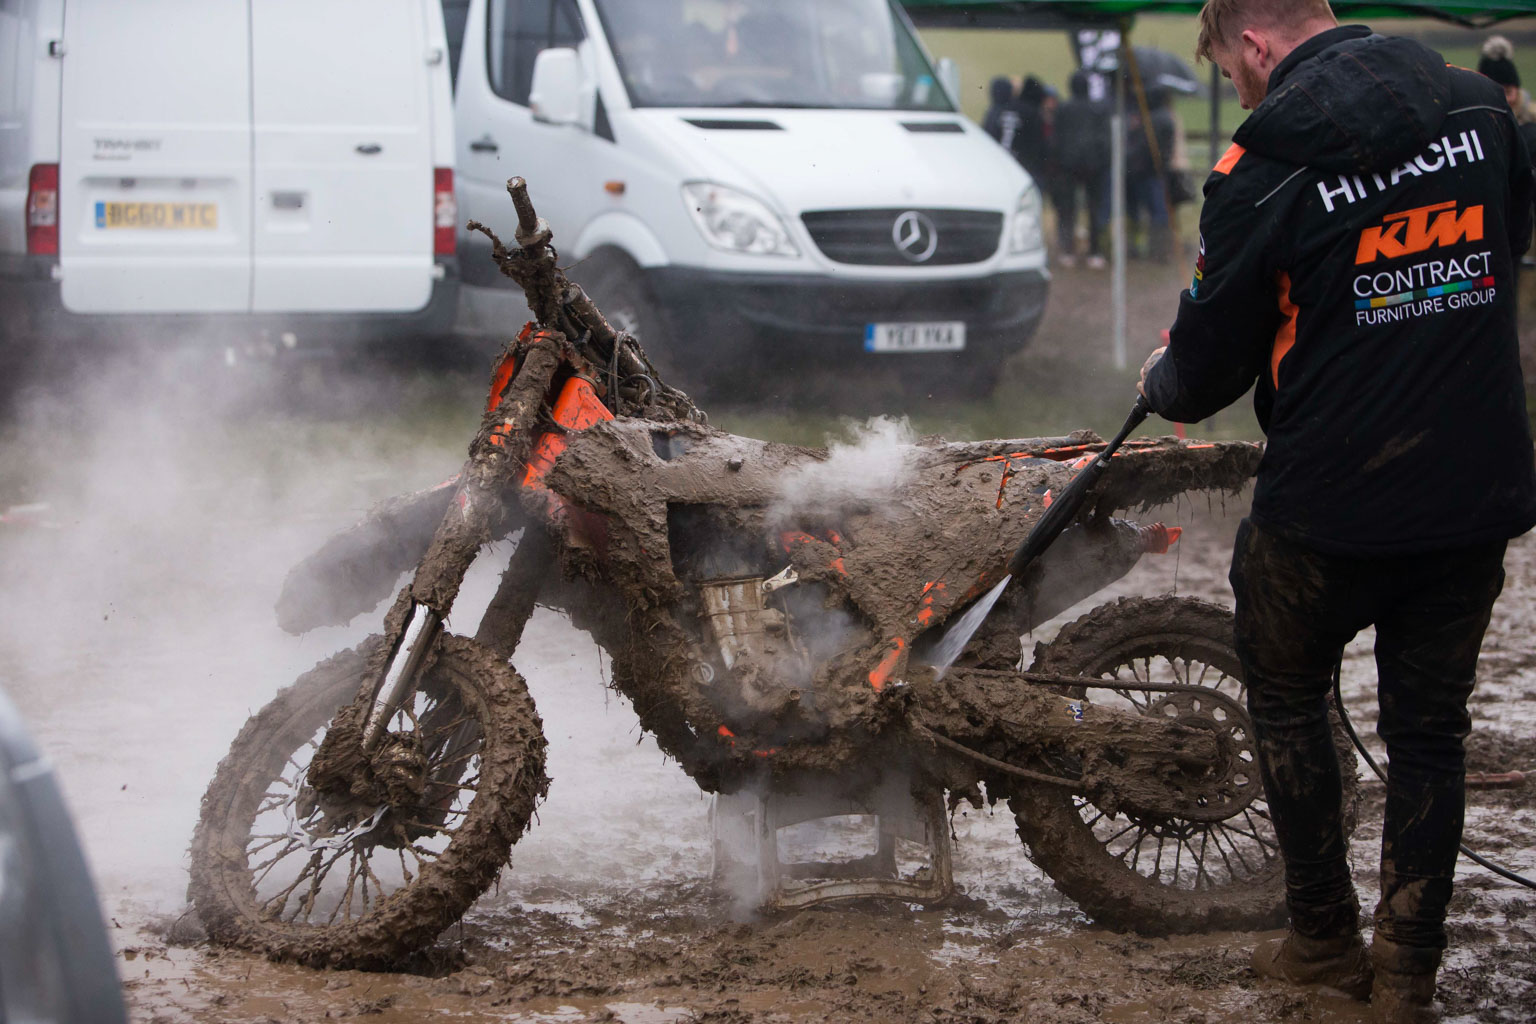 Yep, a bit muddy